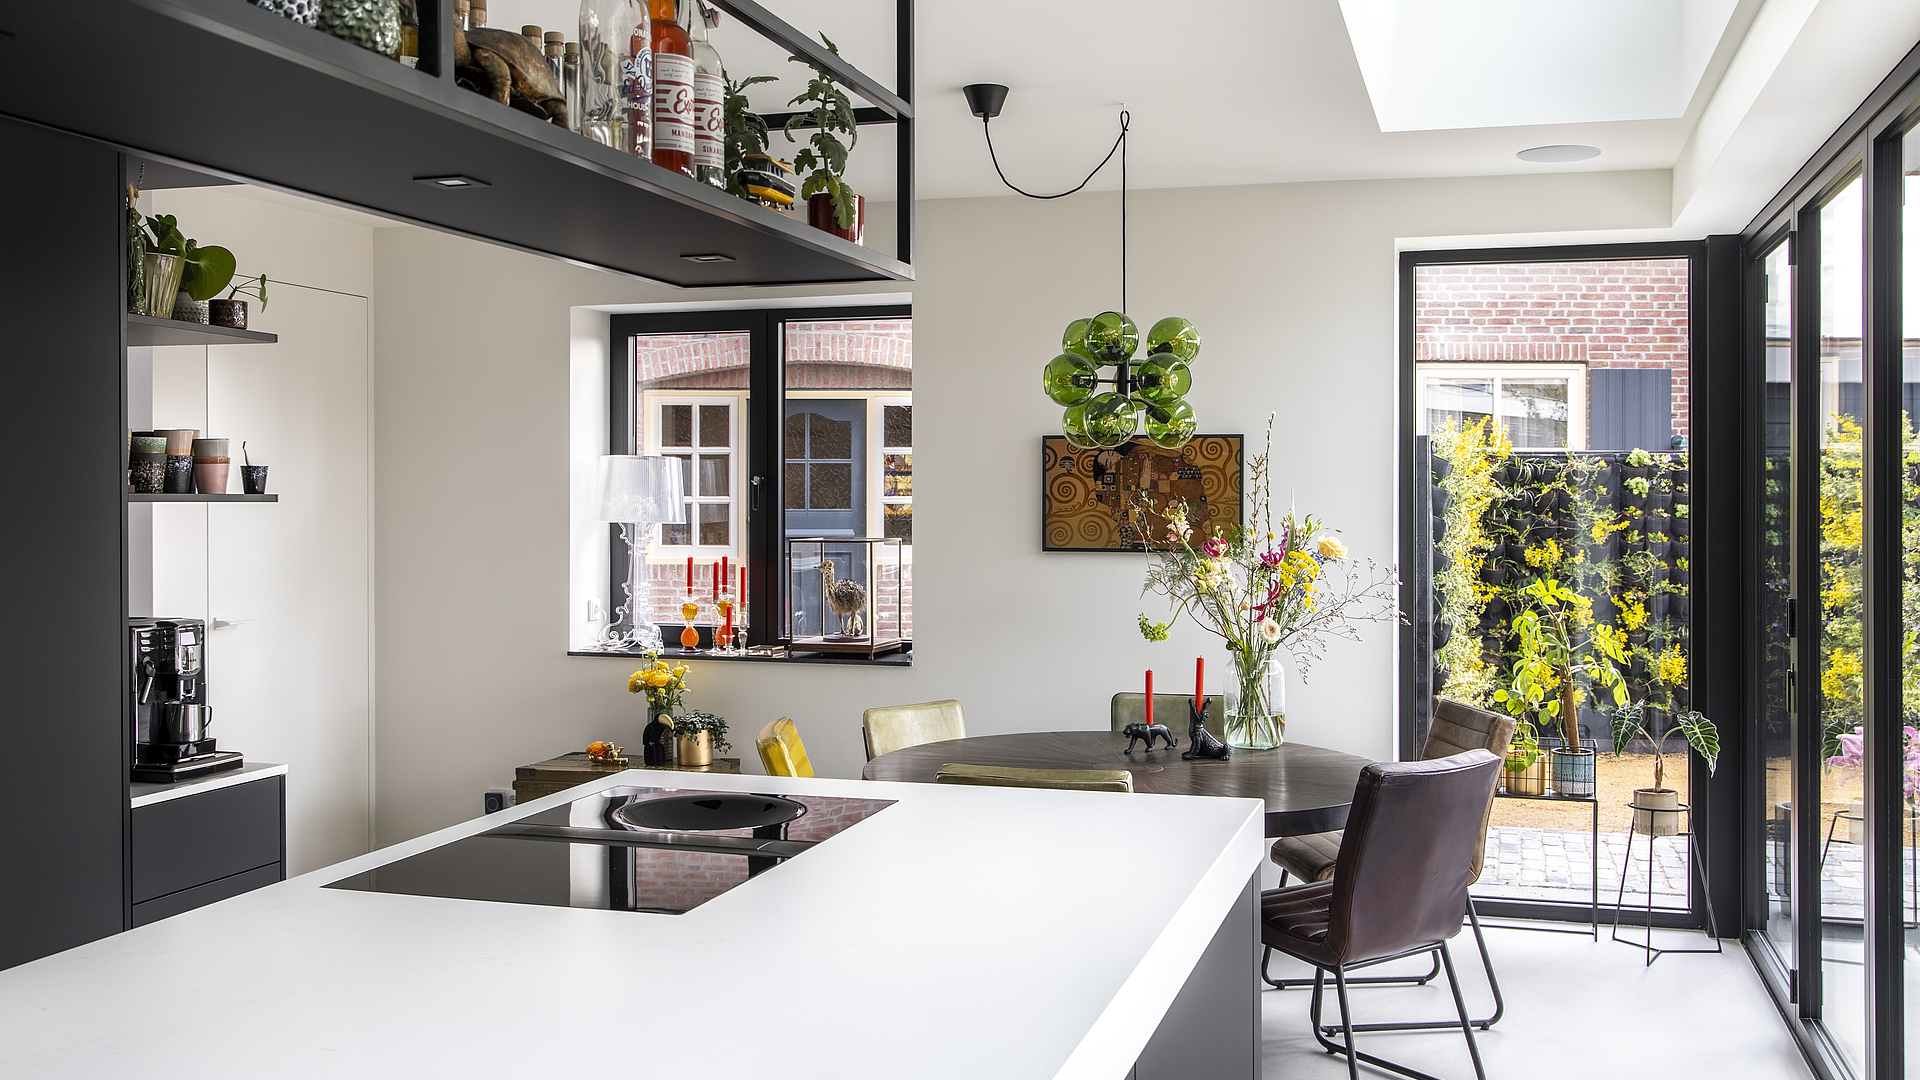 Kitchen jungle: a quirky décor with matt-black elements | BORA